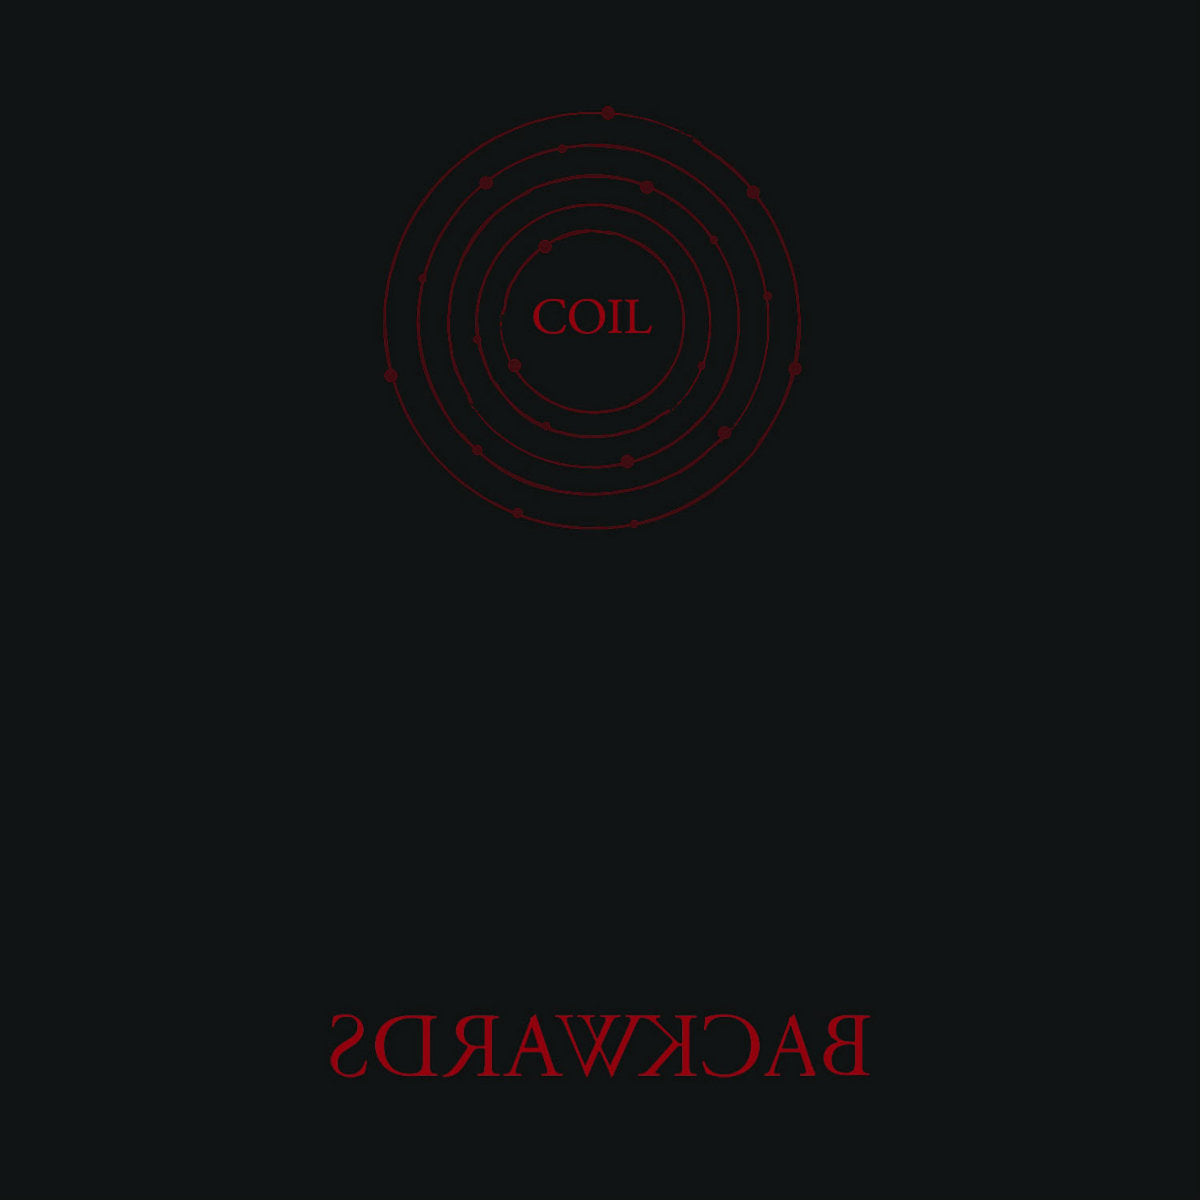 Coil - Backwards CD